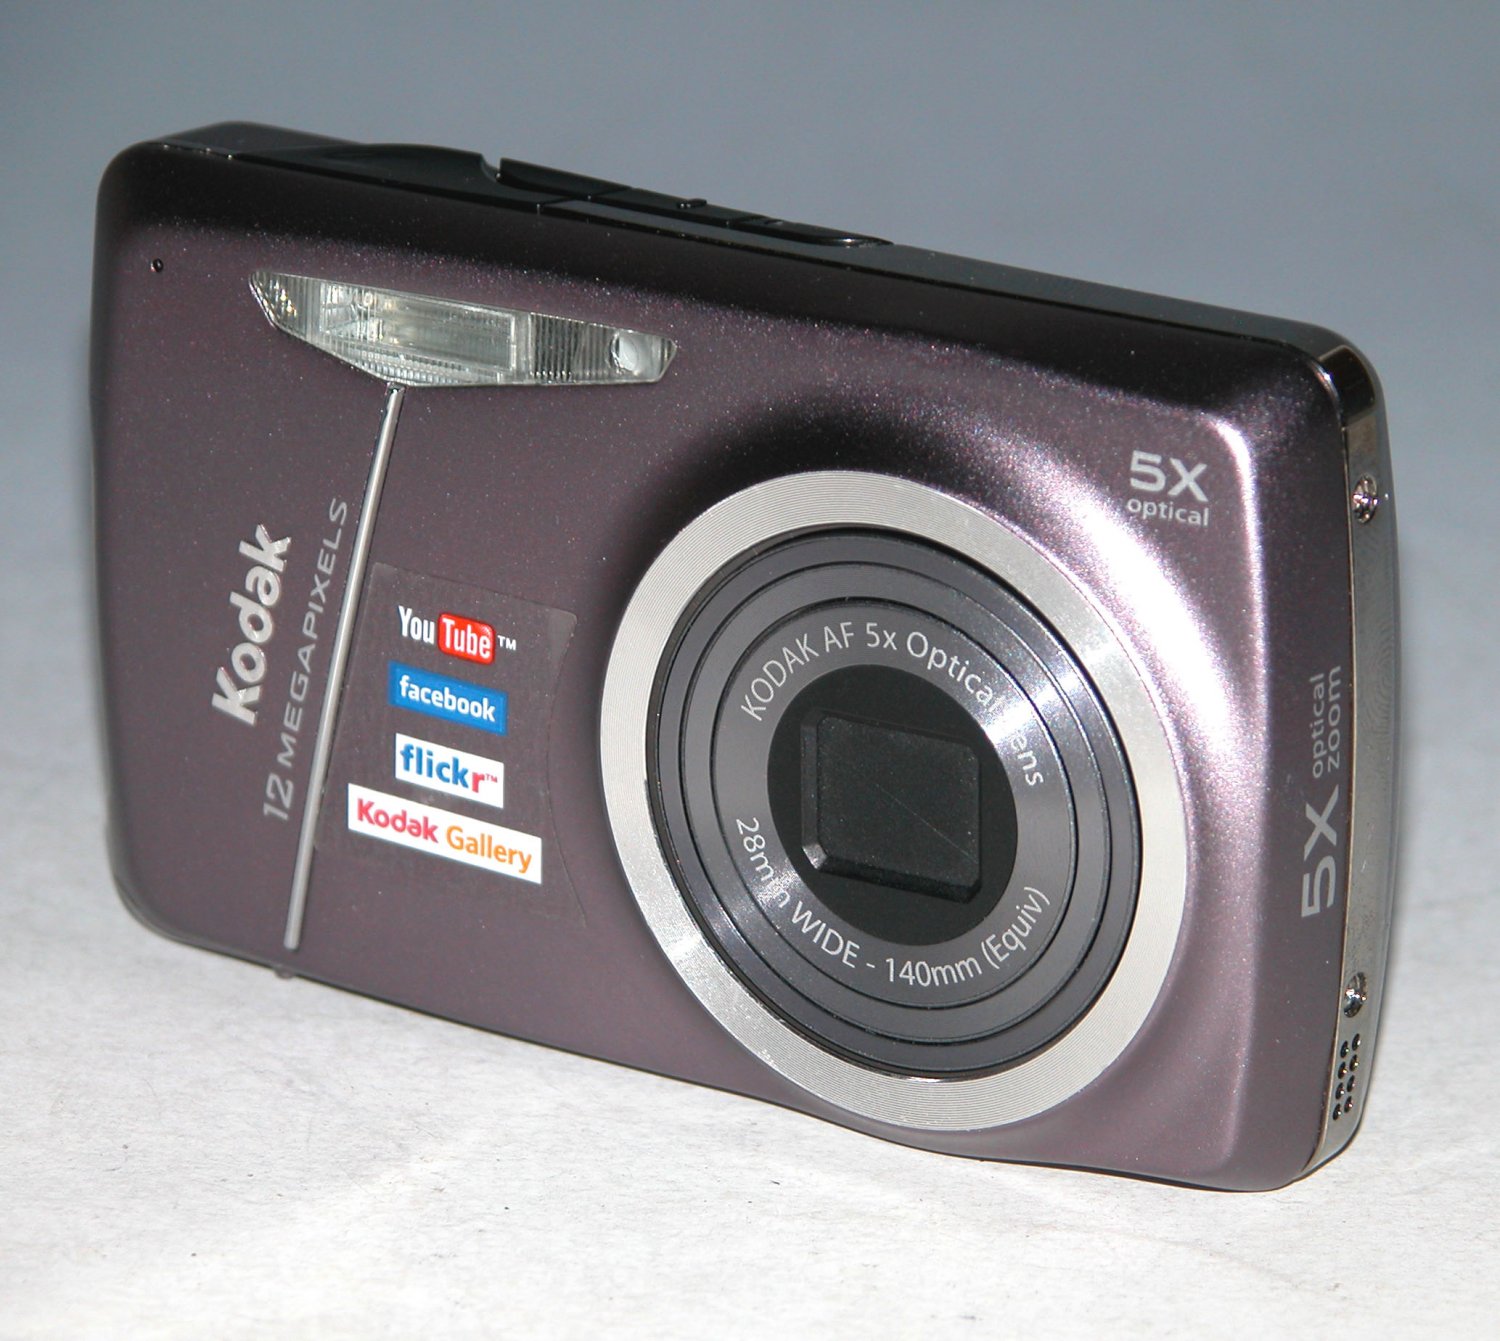 Kodak EasyShare M550 12.3MP Digital Camera - Purple  #6348